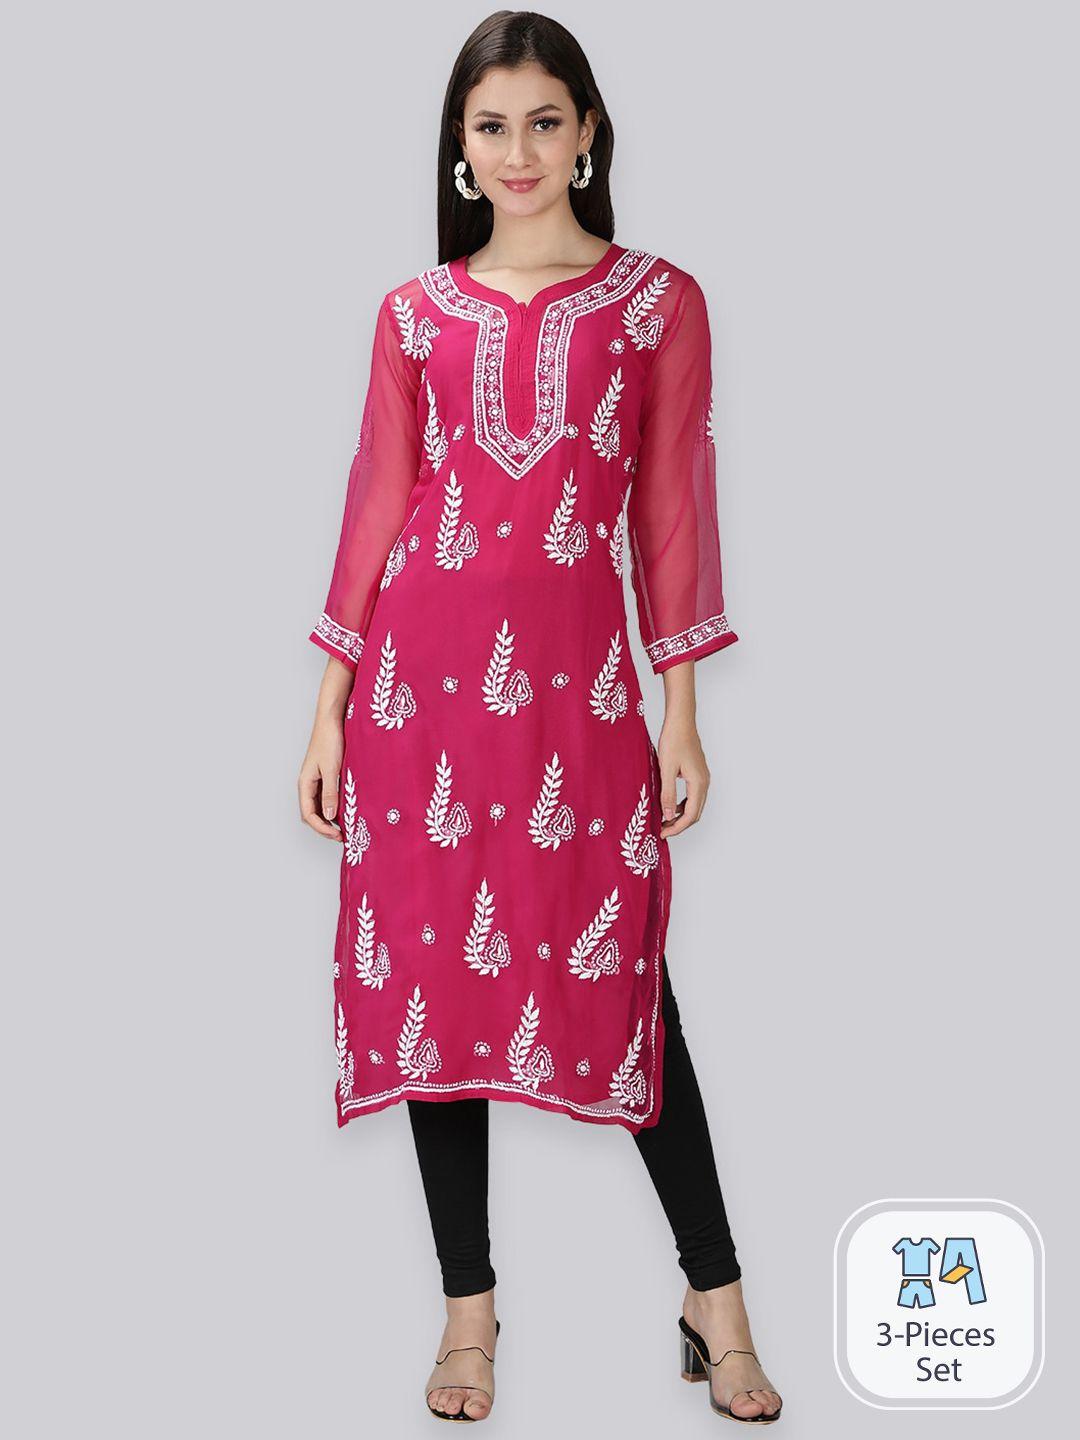 seva-chikan-women-magenta-ethnic-motifs-yoke-design-flared-sleeves-chikankari-handloom-georgette-kurta